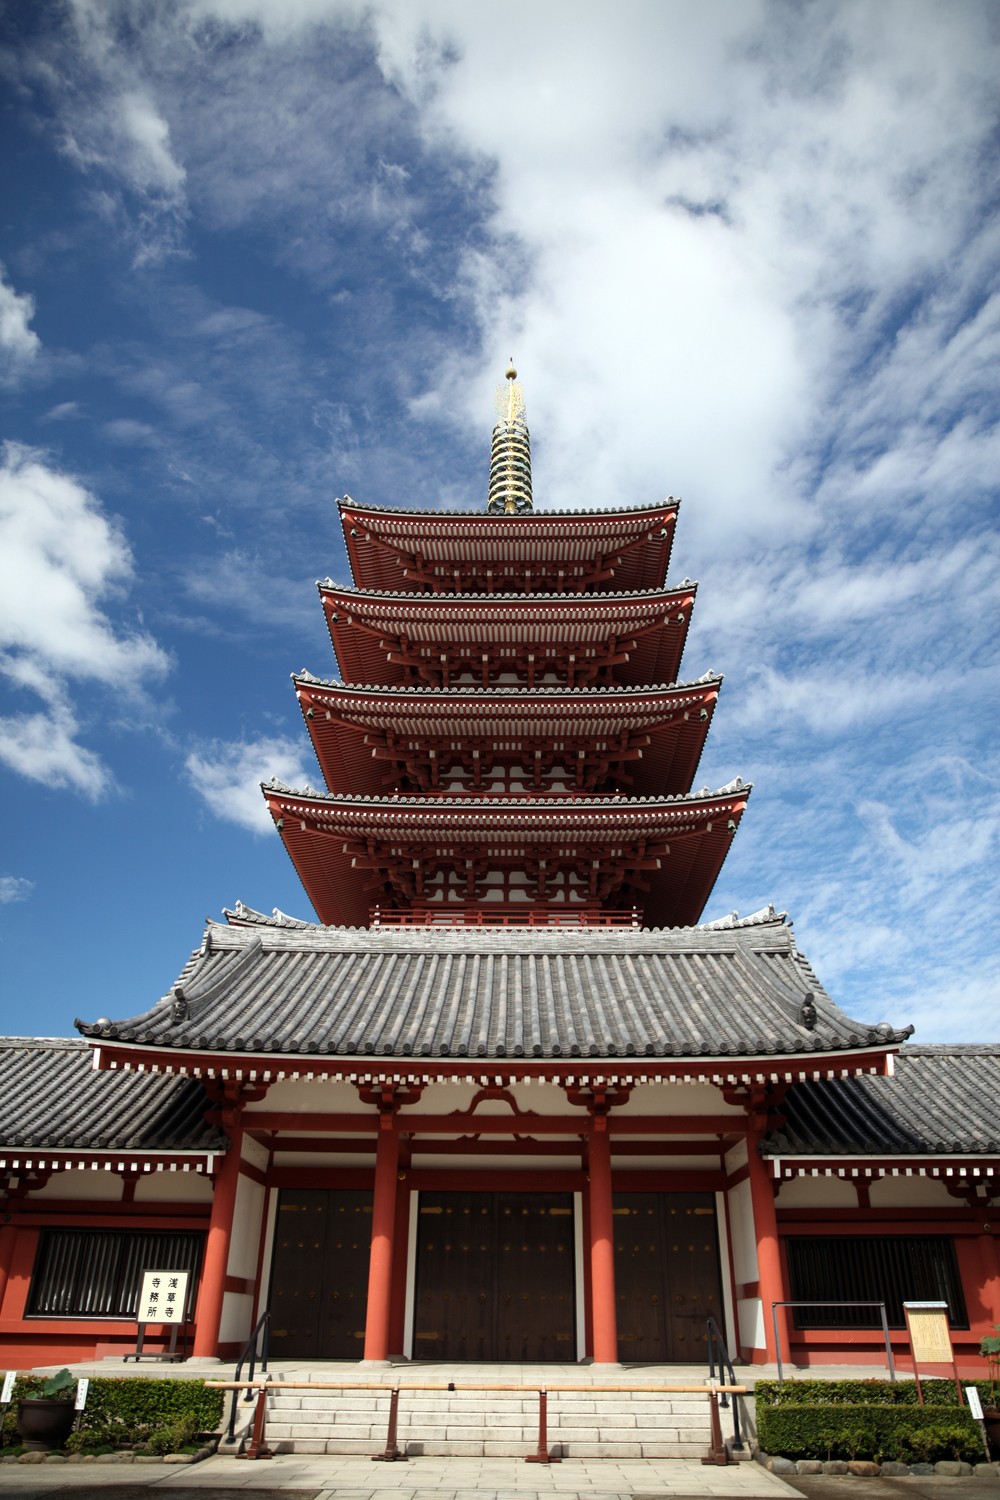 Highlights of Senso-ji Temple 4. Five-storied pagoda